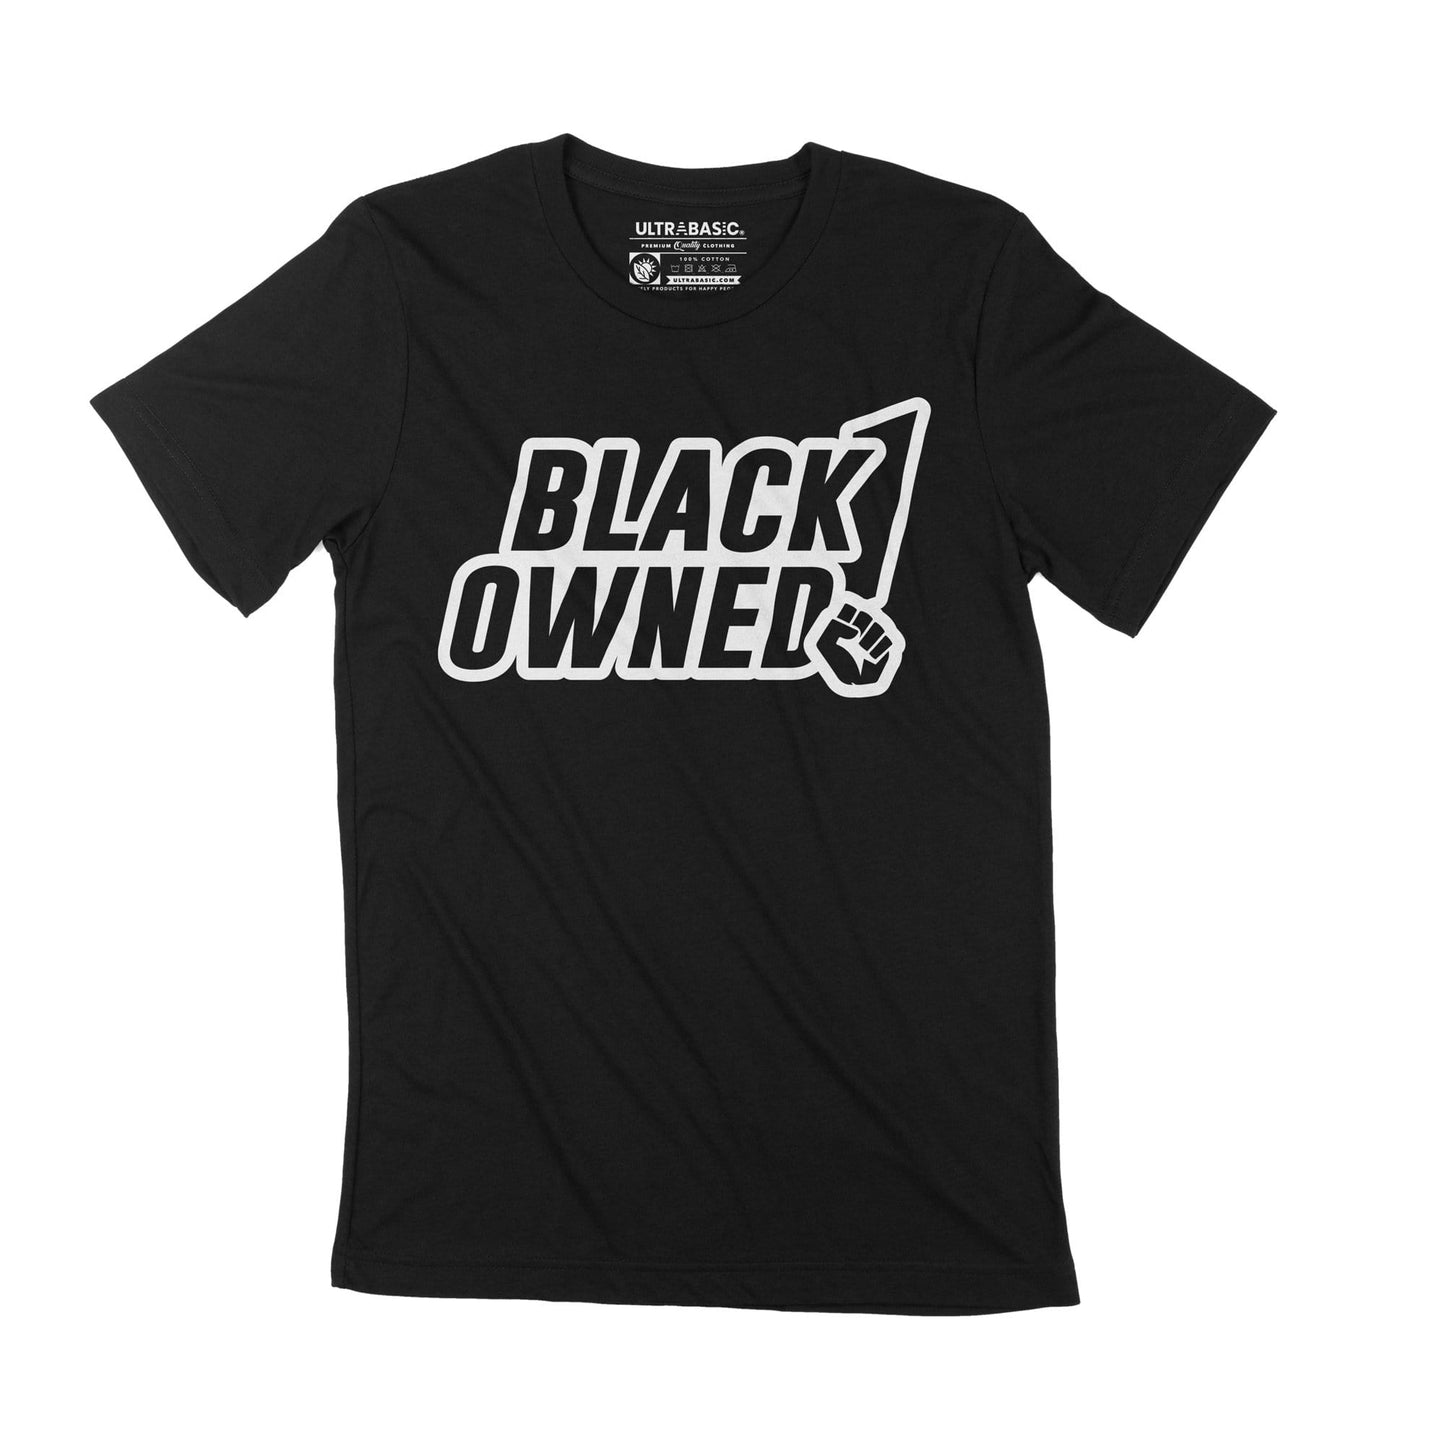 Unisex Adult T-Shirt Black Owned Black Lives Matter BLM Shirt